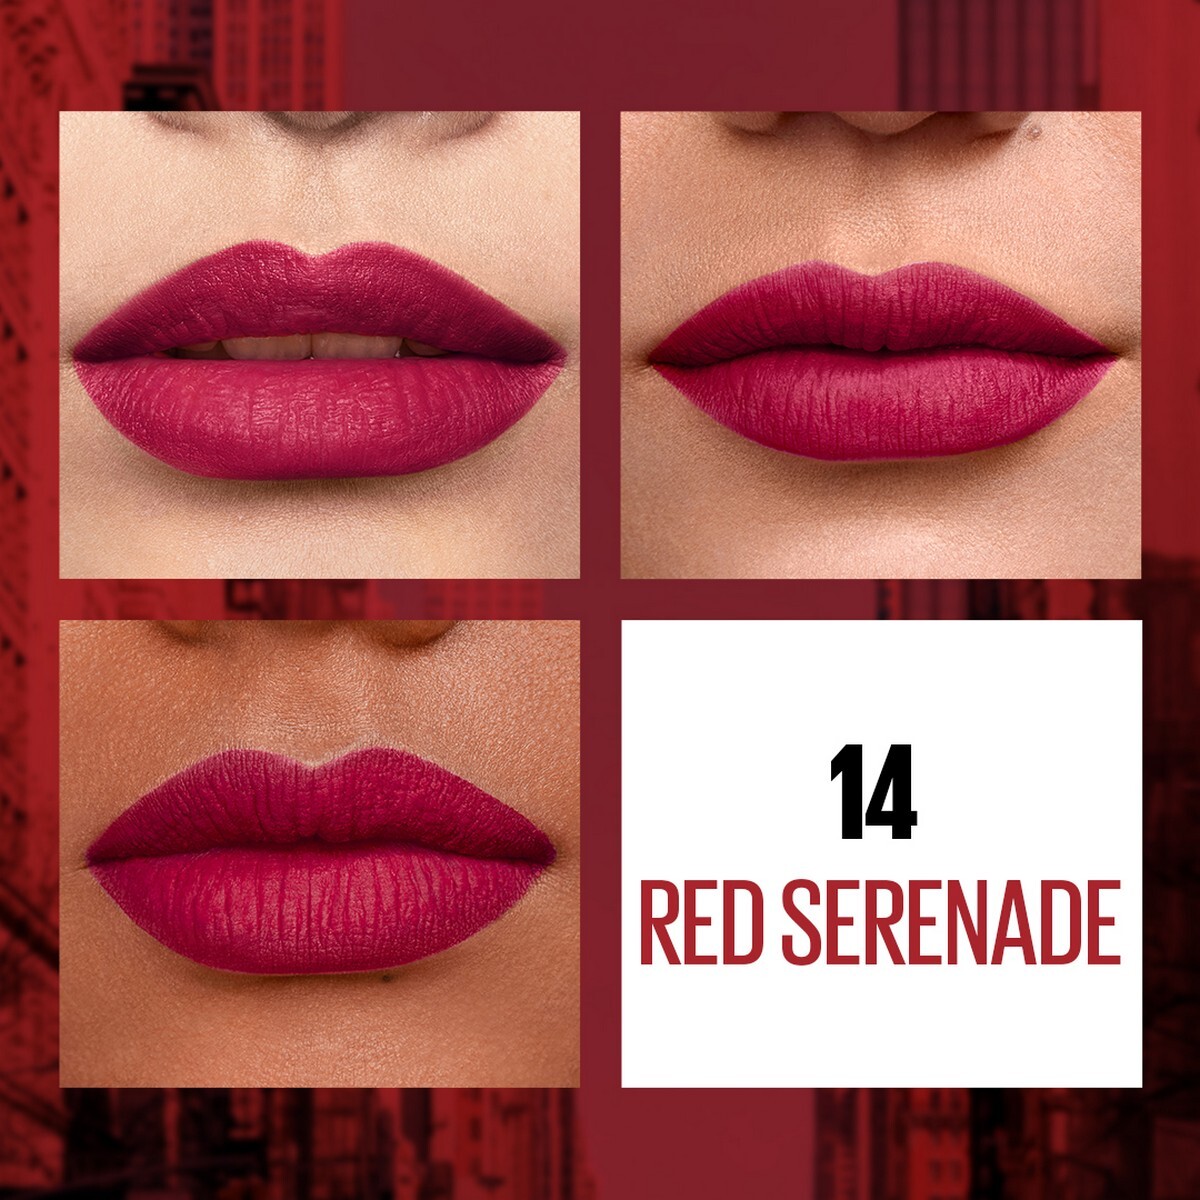 Maybelline New York Sensational Liquid Matte Lipstick, 14 Red Serenade, 7ml - Liquid Lipstick Shades Delivering Intense Matte Color Effect